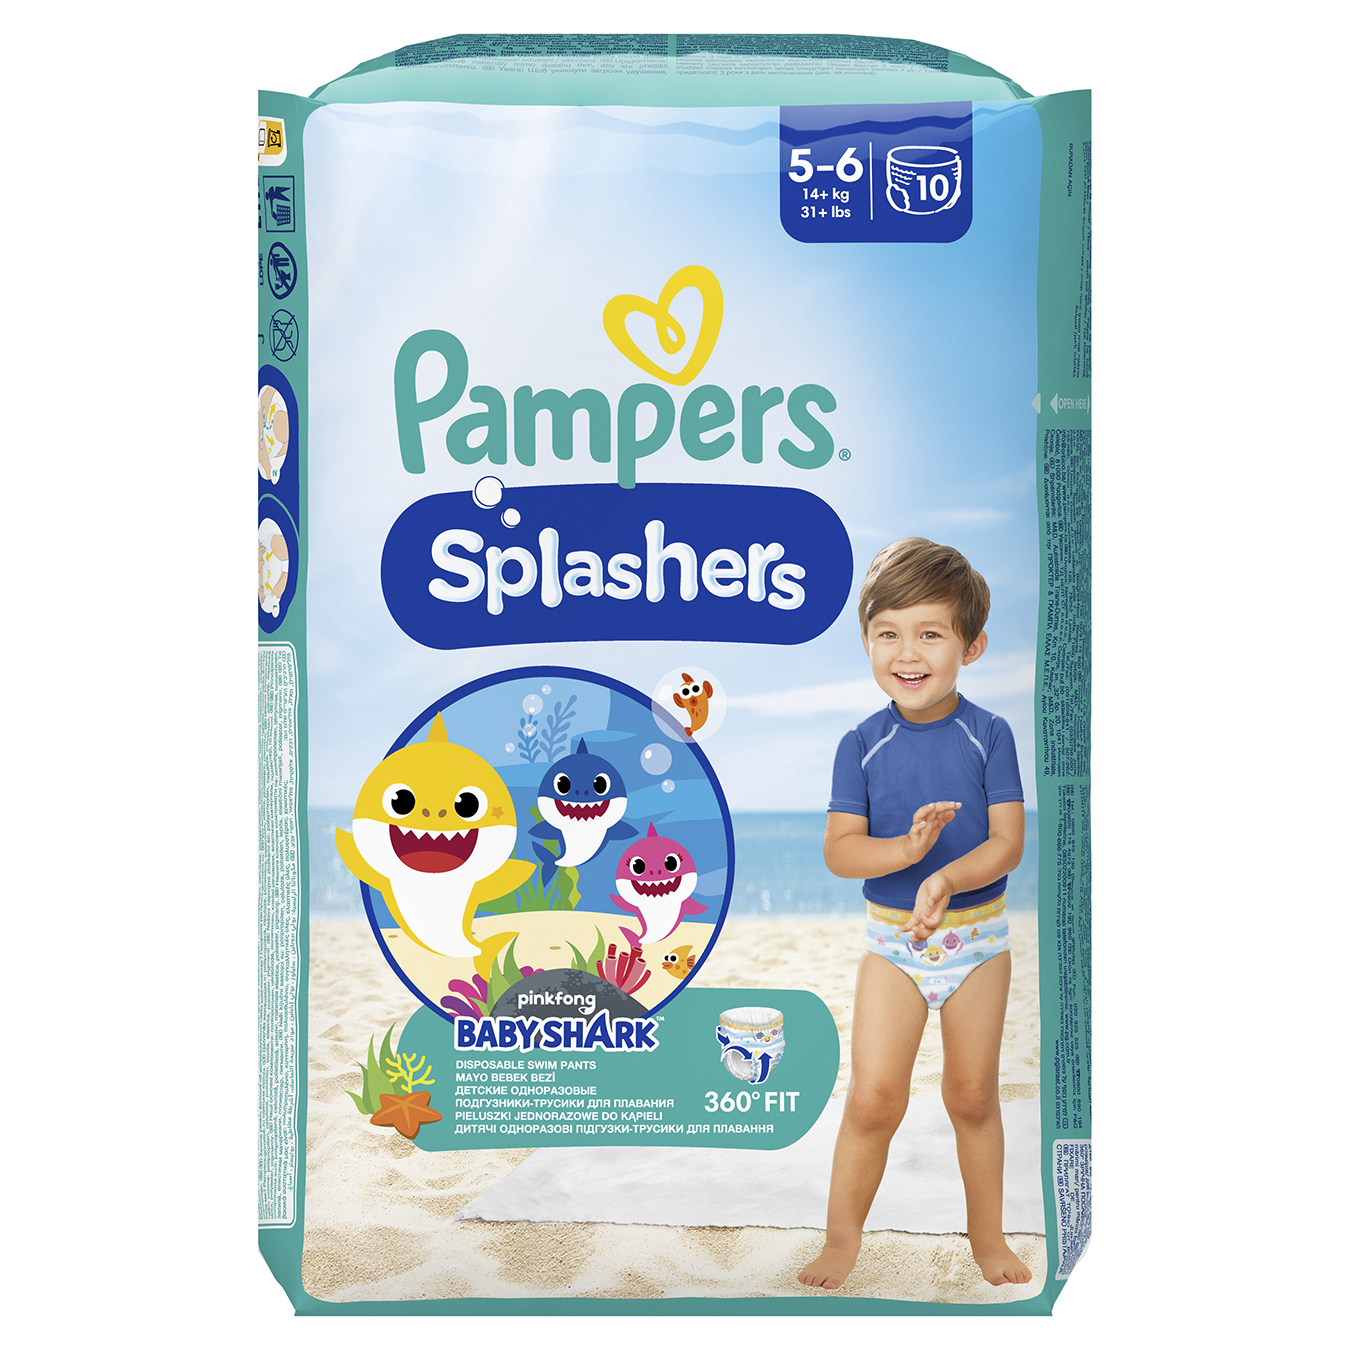 Diapers-panties Pampers Splas hers Junior children's disposable swim diapers 12-17 kg